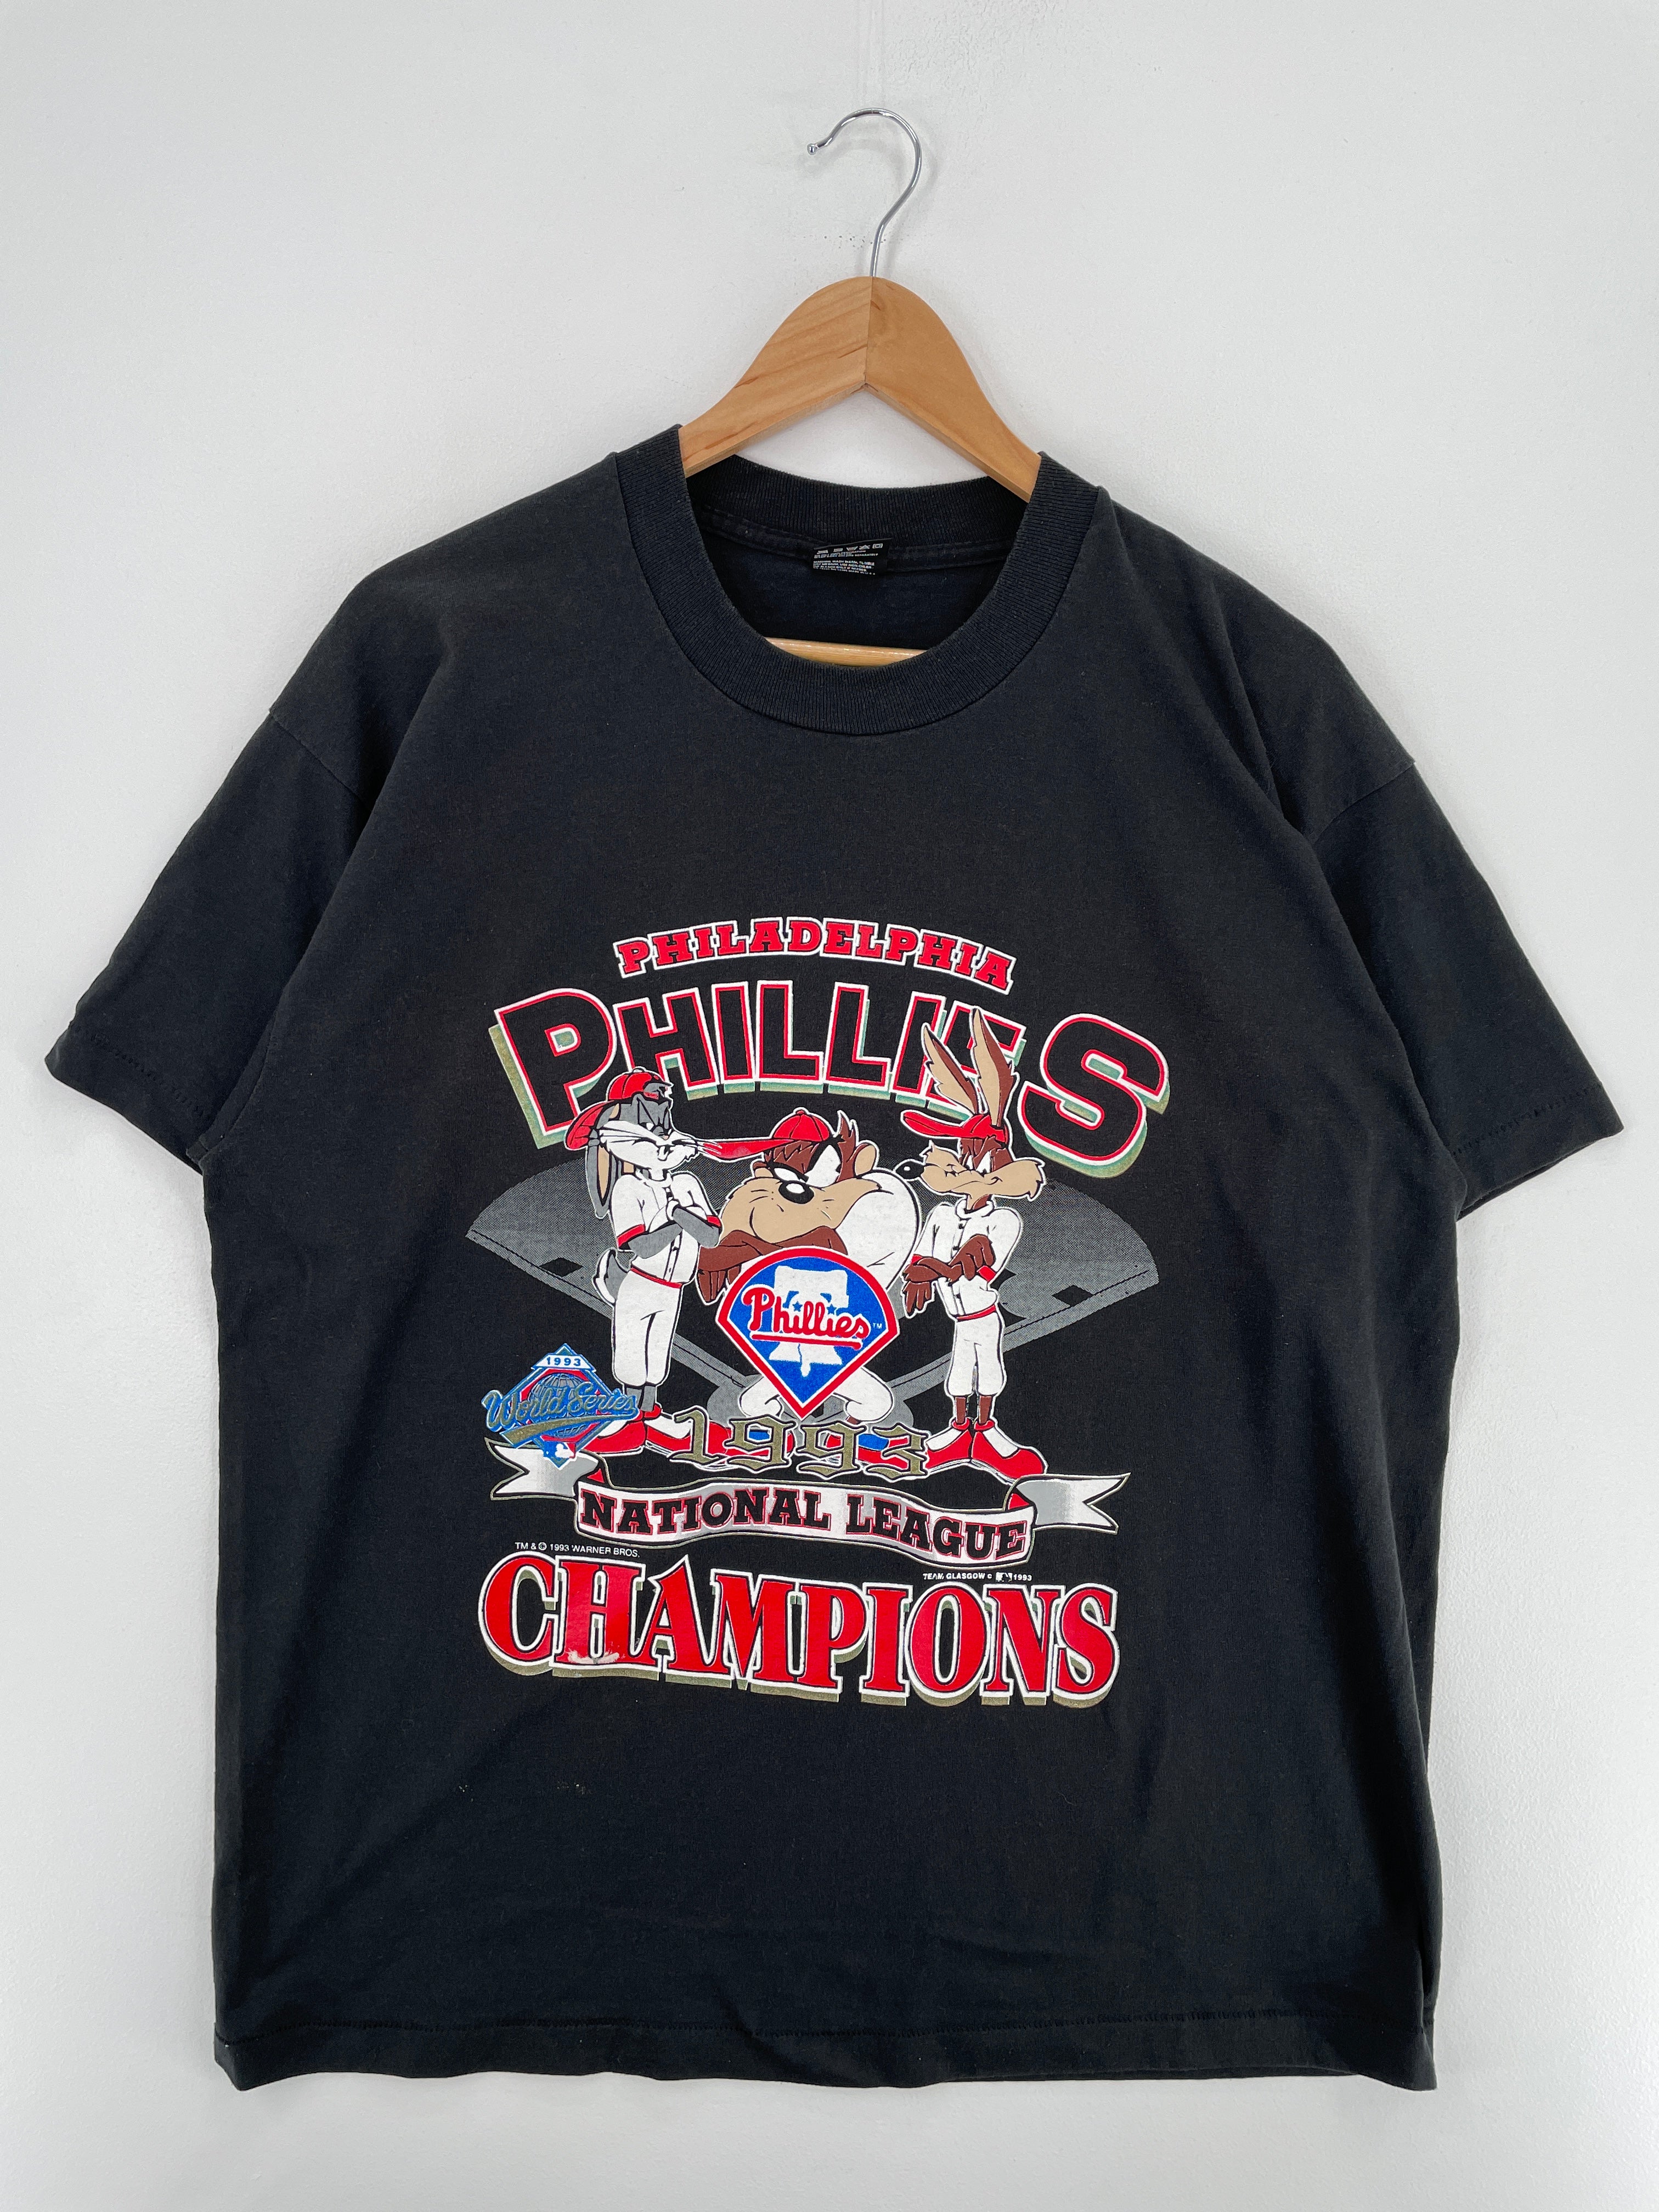 1993 phillies shirt